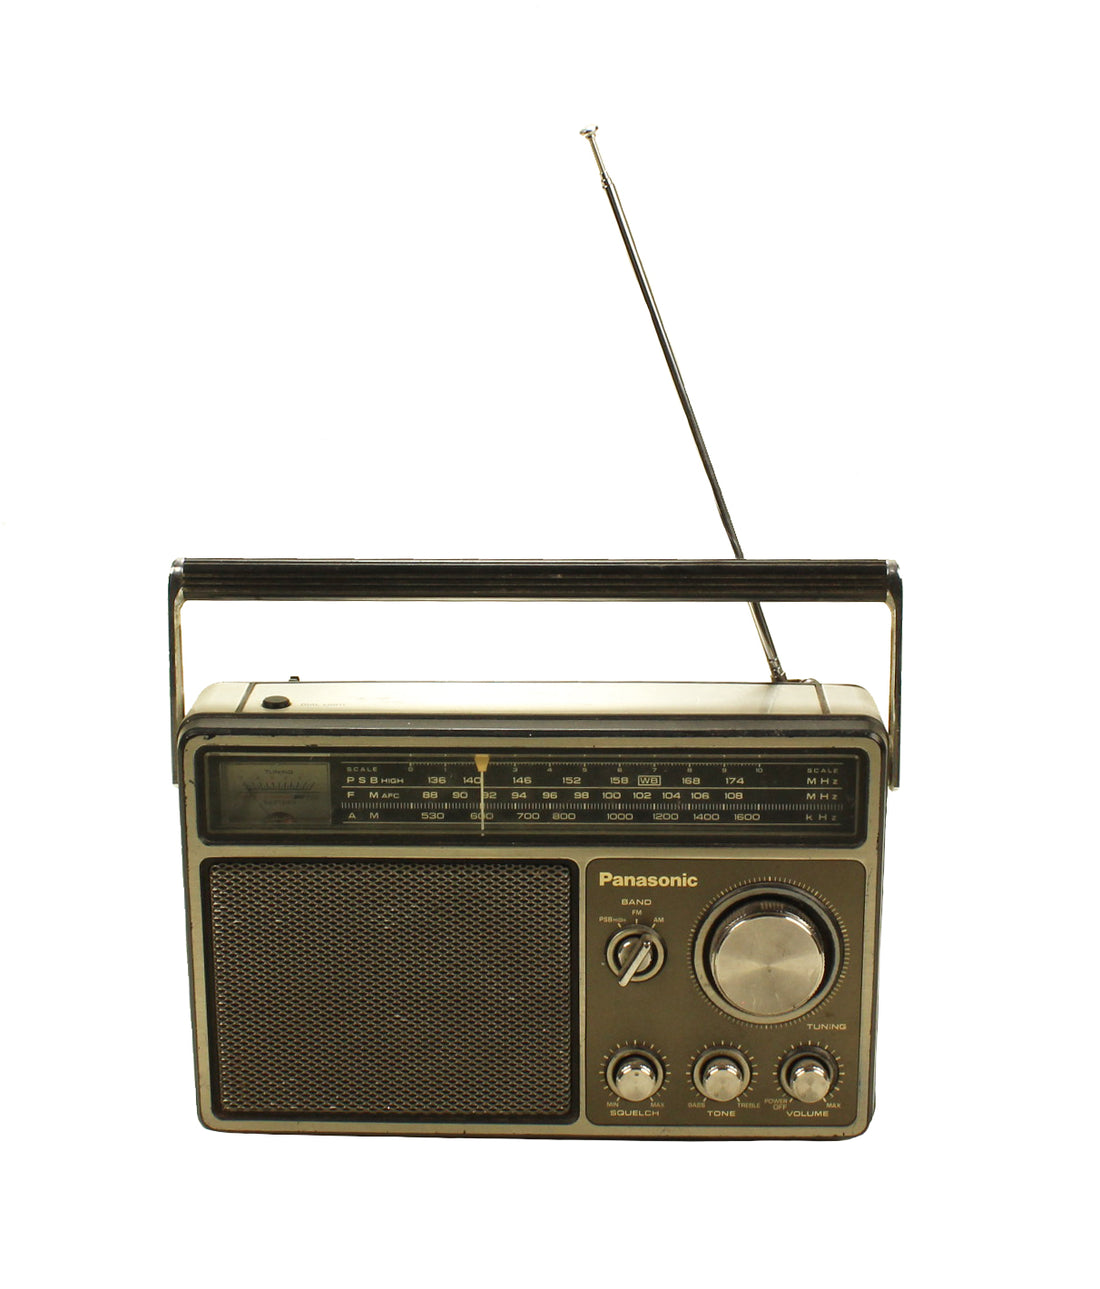 Portable "Panasonic" Radio